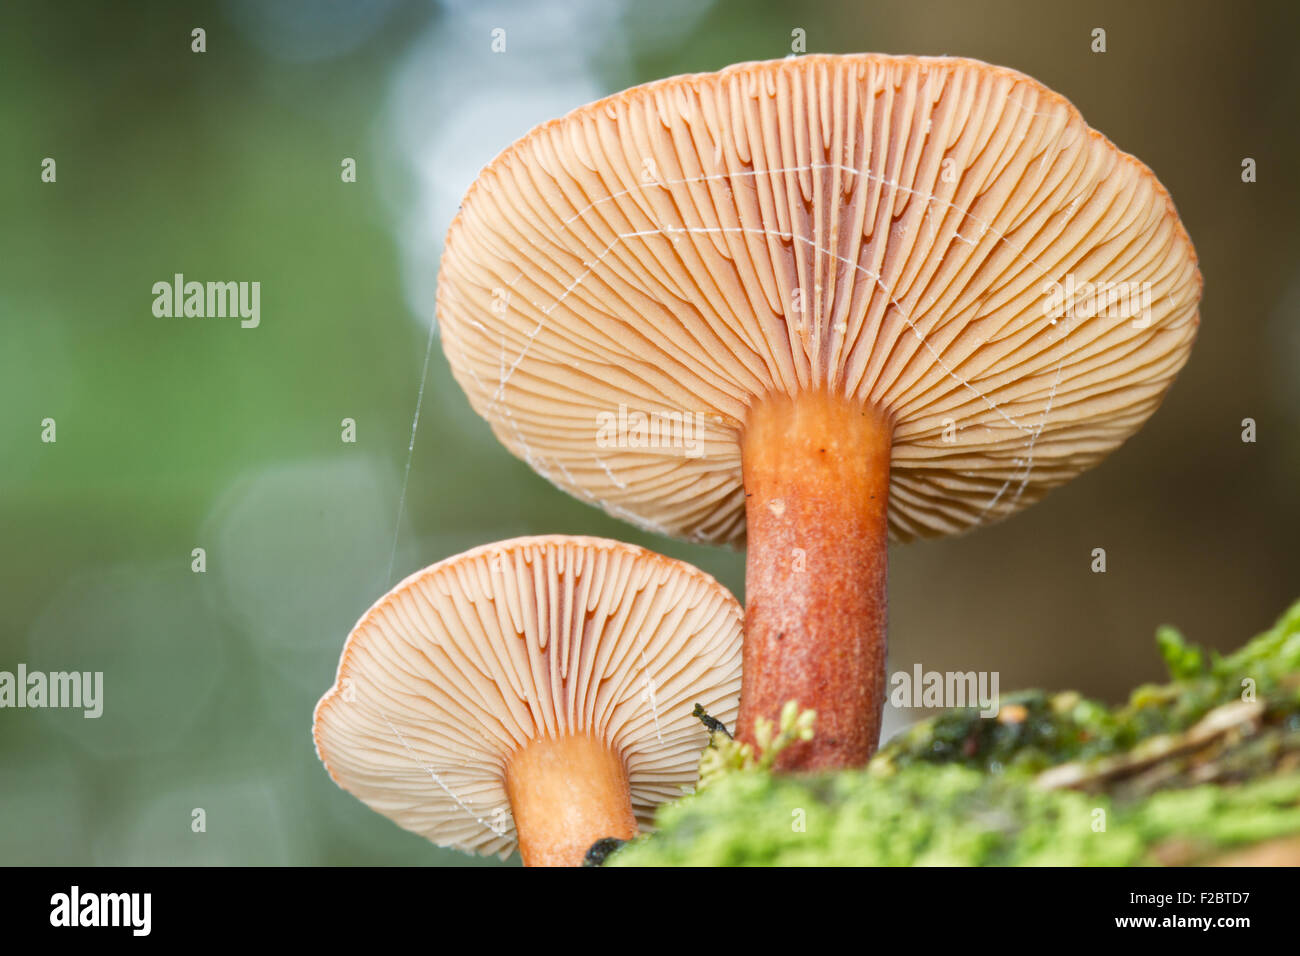 Two mushrooms, probably Milk cap species  (Lactarius), on rotting wood Stock Photo